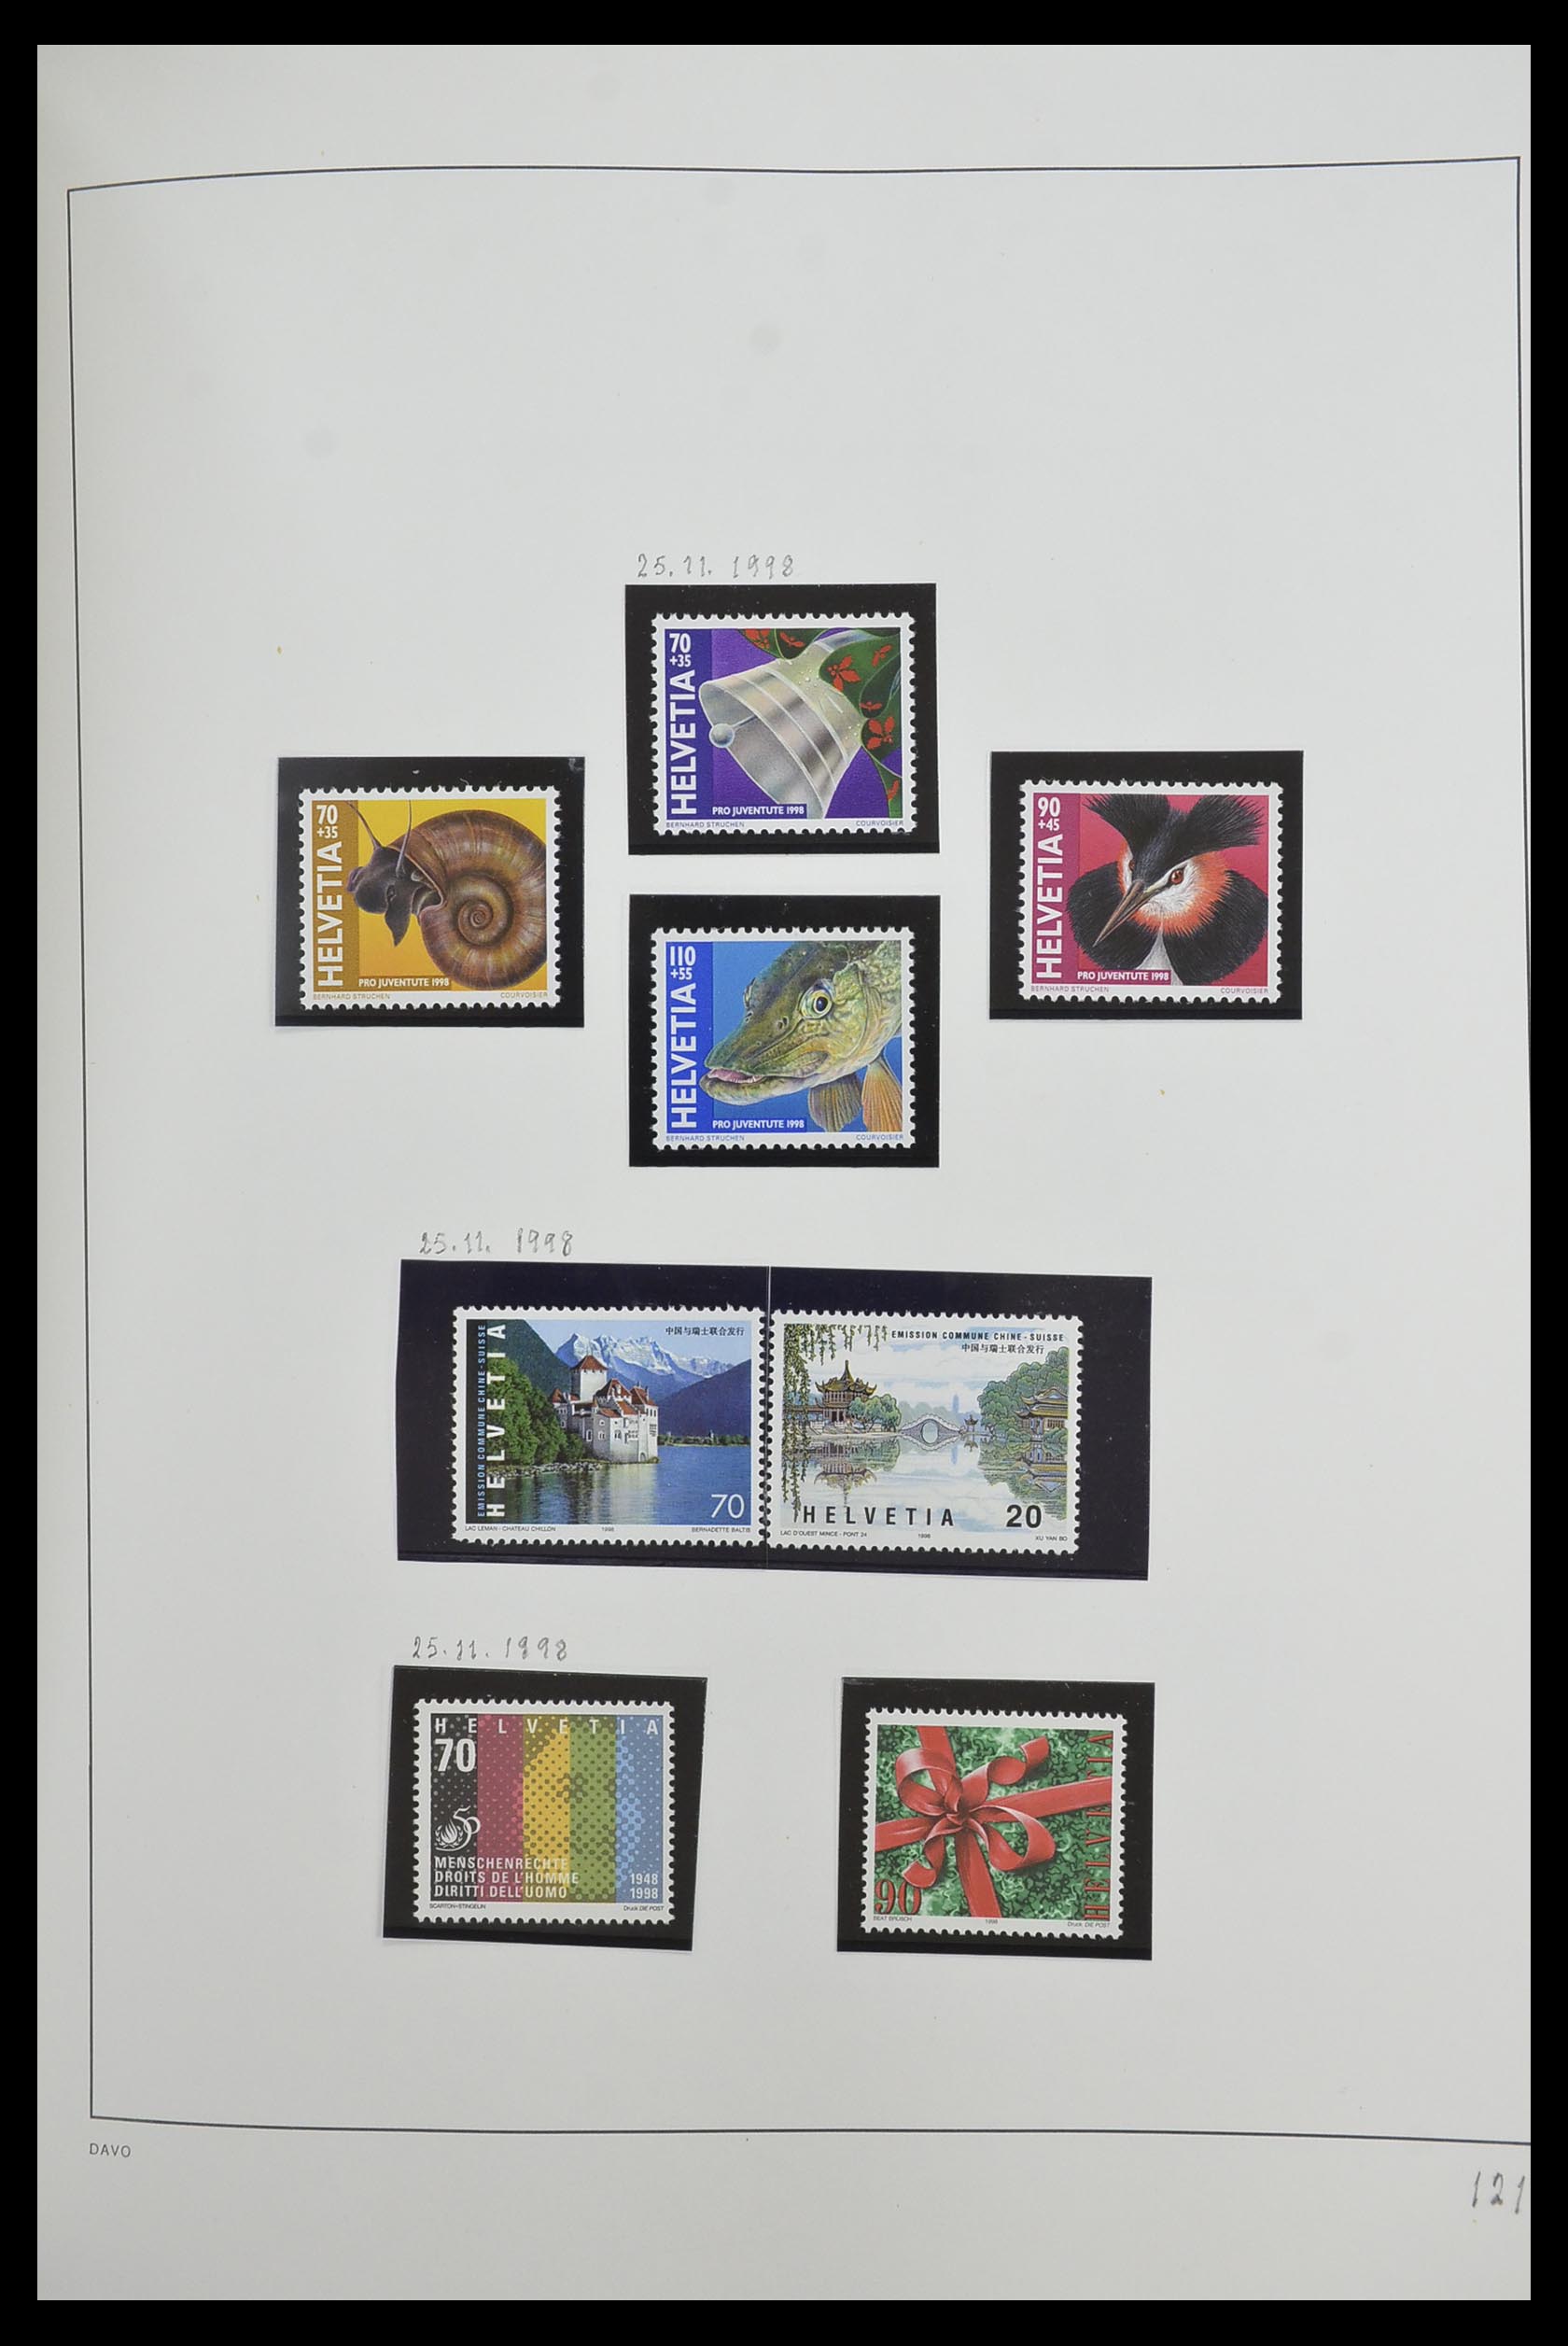 33556 124 - Stamp collection 33556 Switzerland 1862-2000.